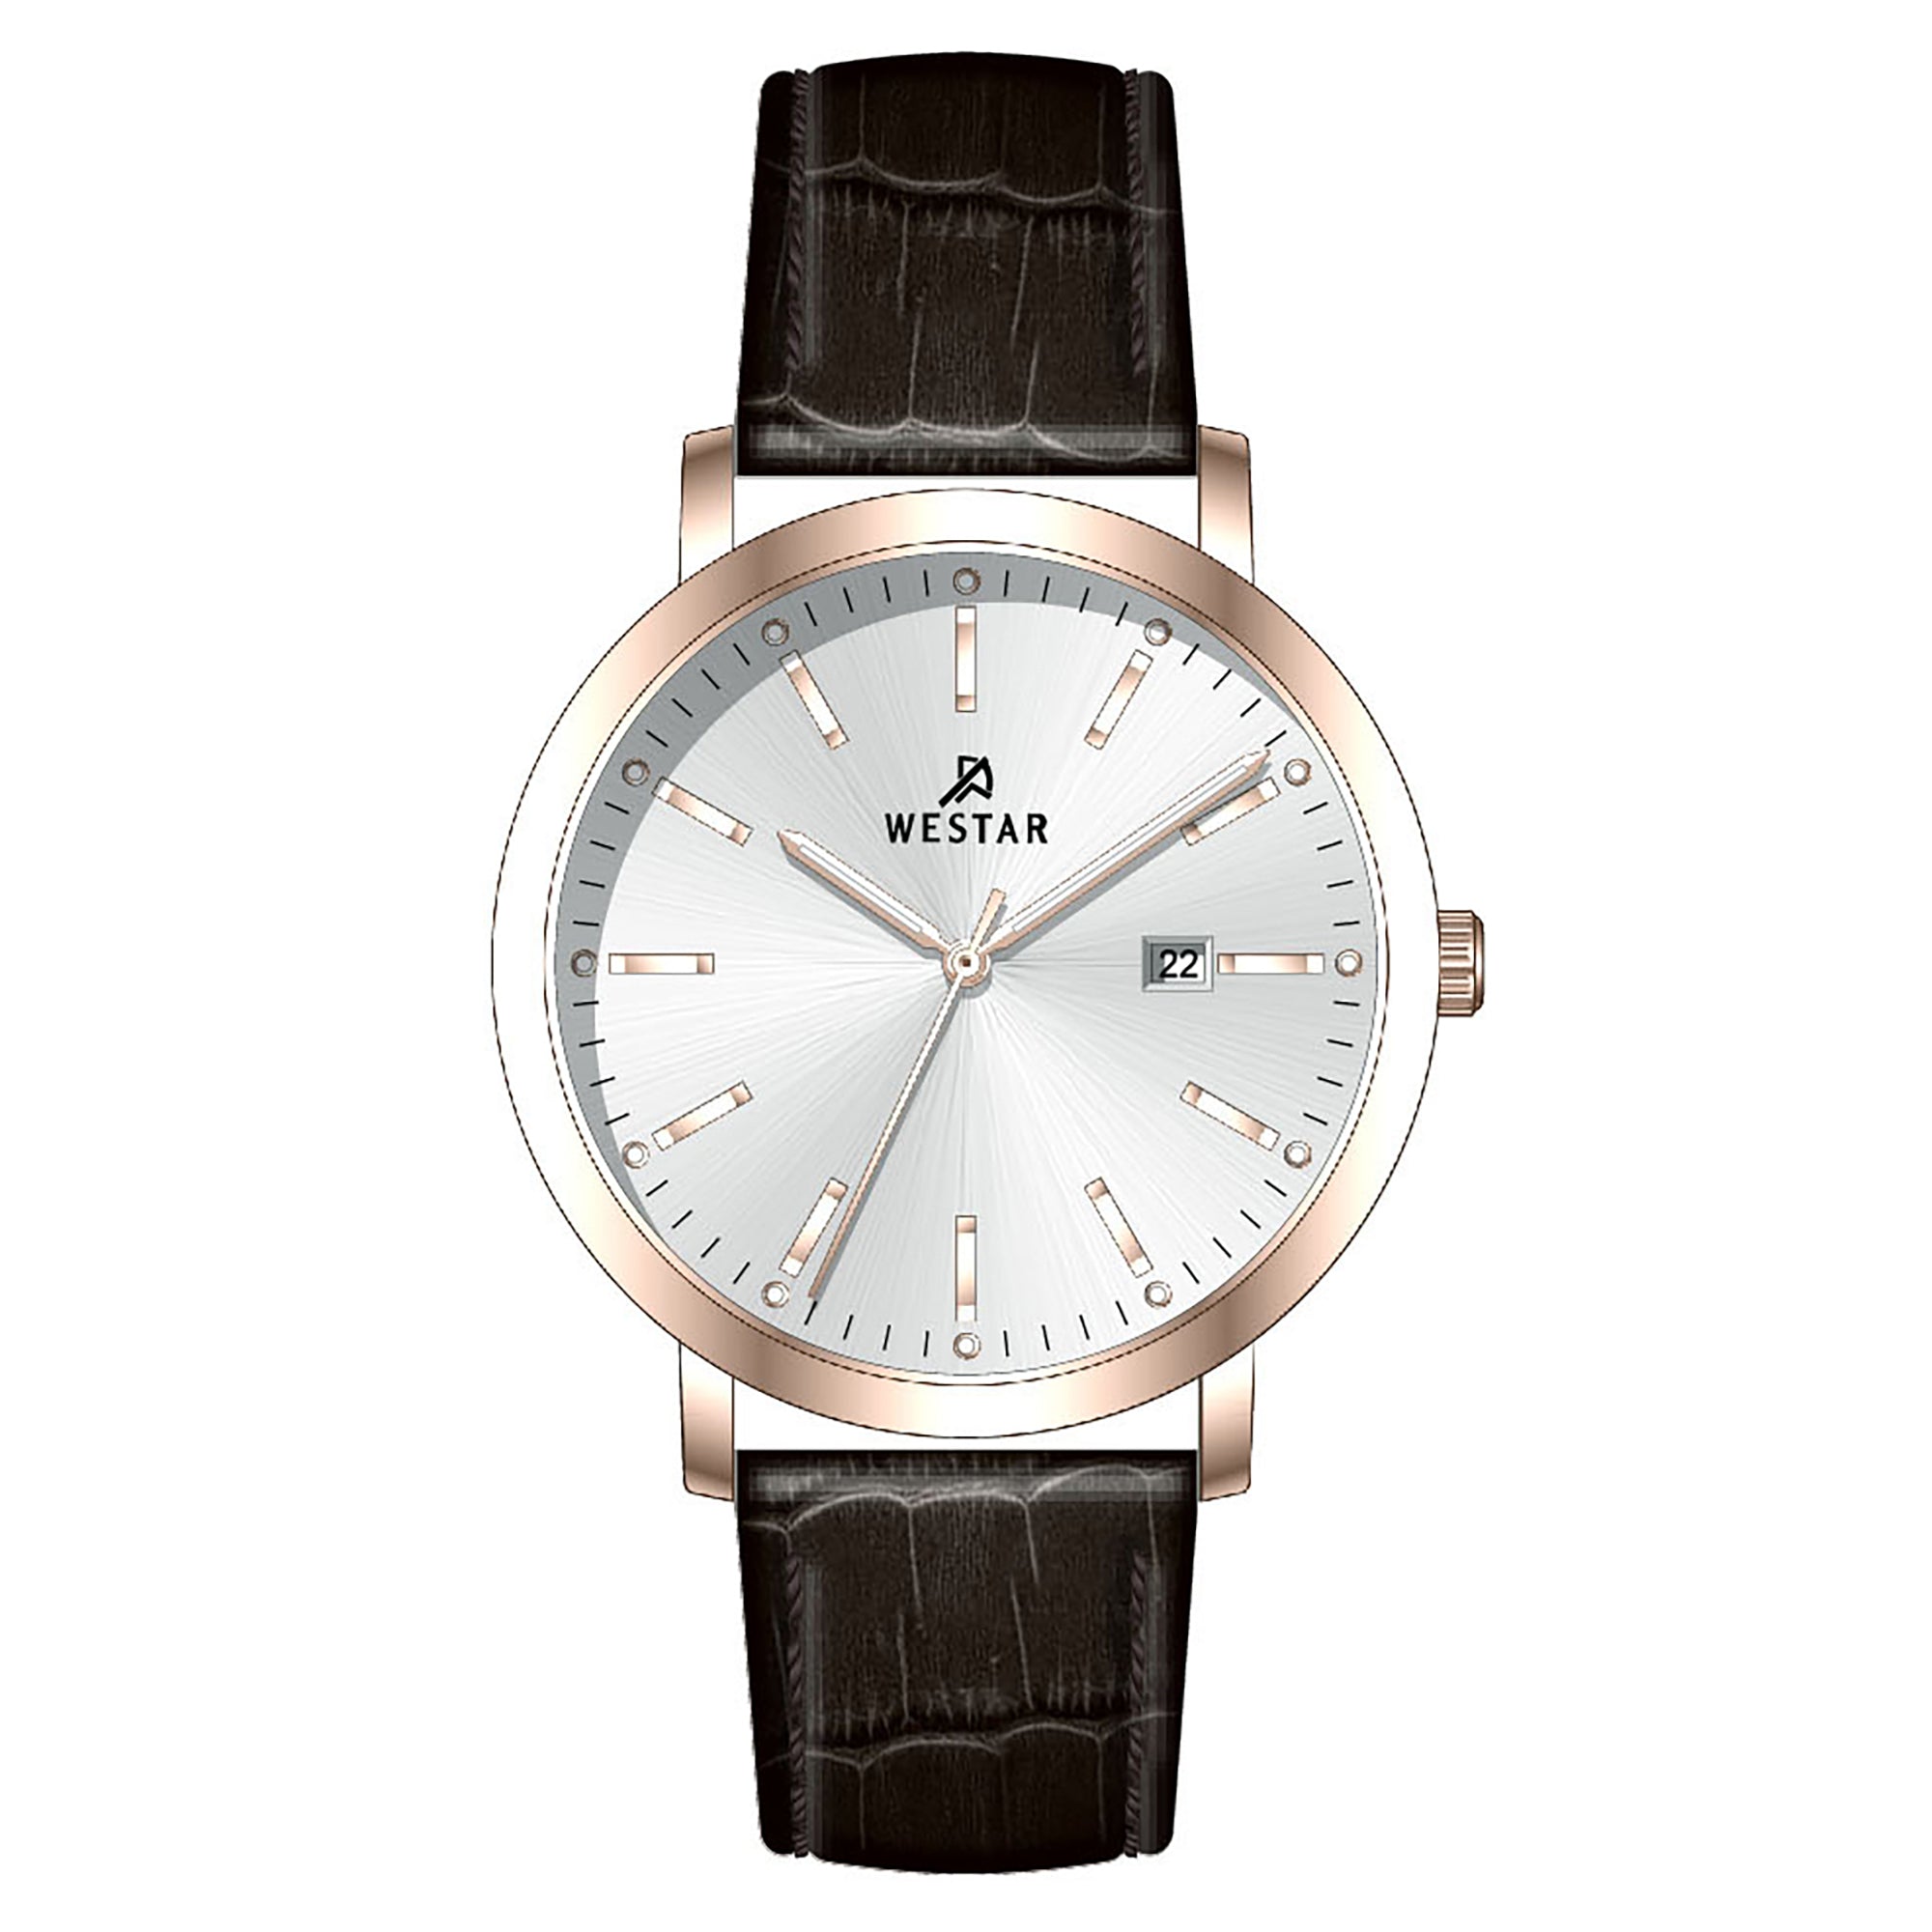 Watch Westar 7777 CBN Men's wristwatch Profile Quartz Swiss Made | eBay